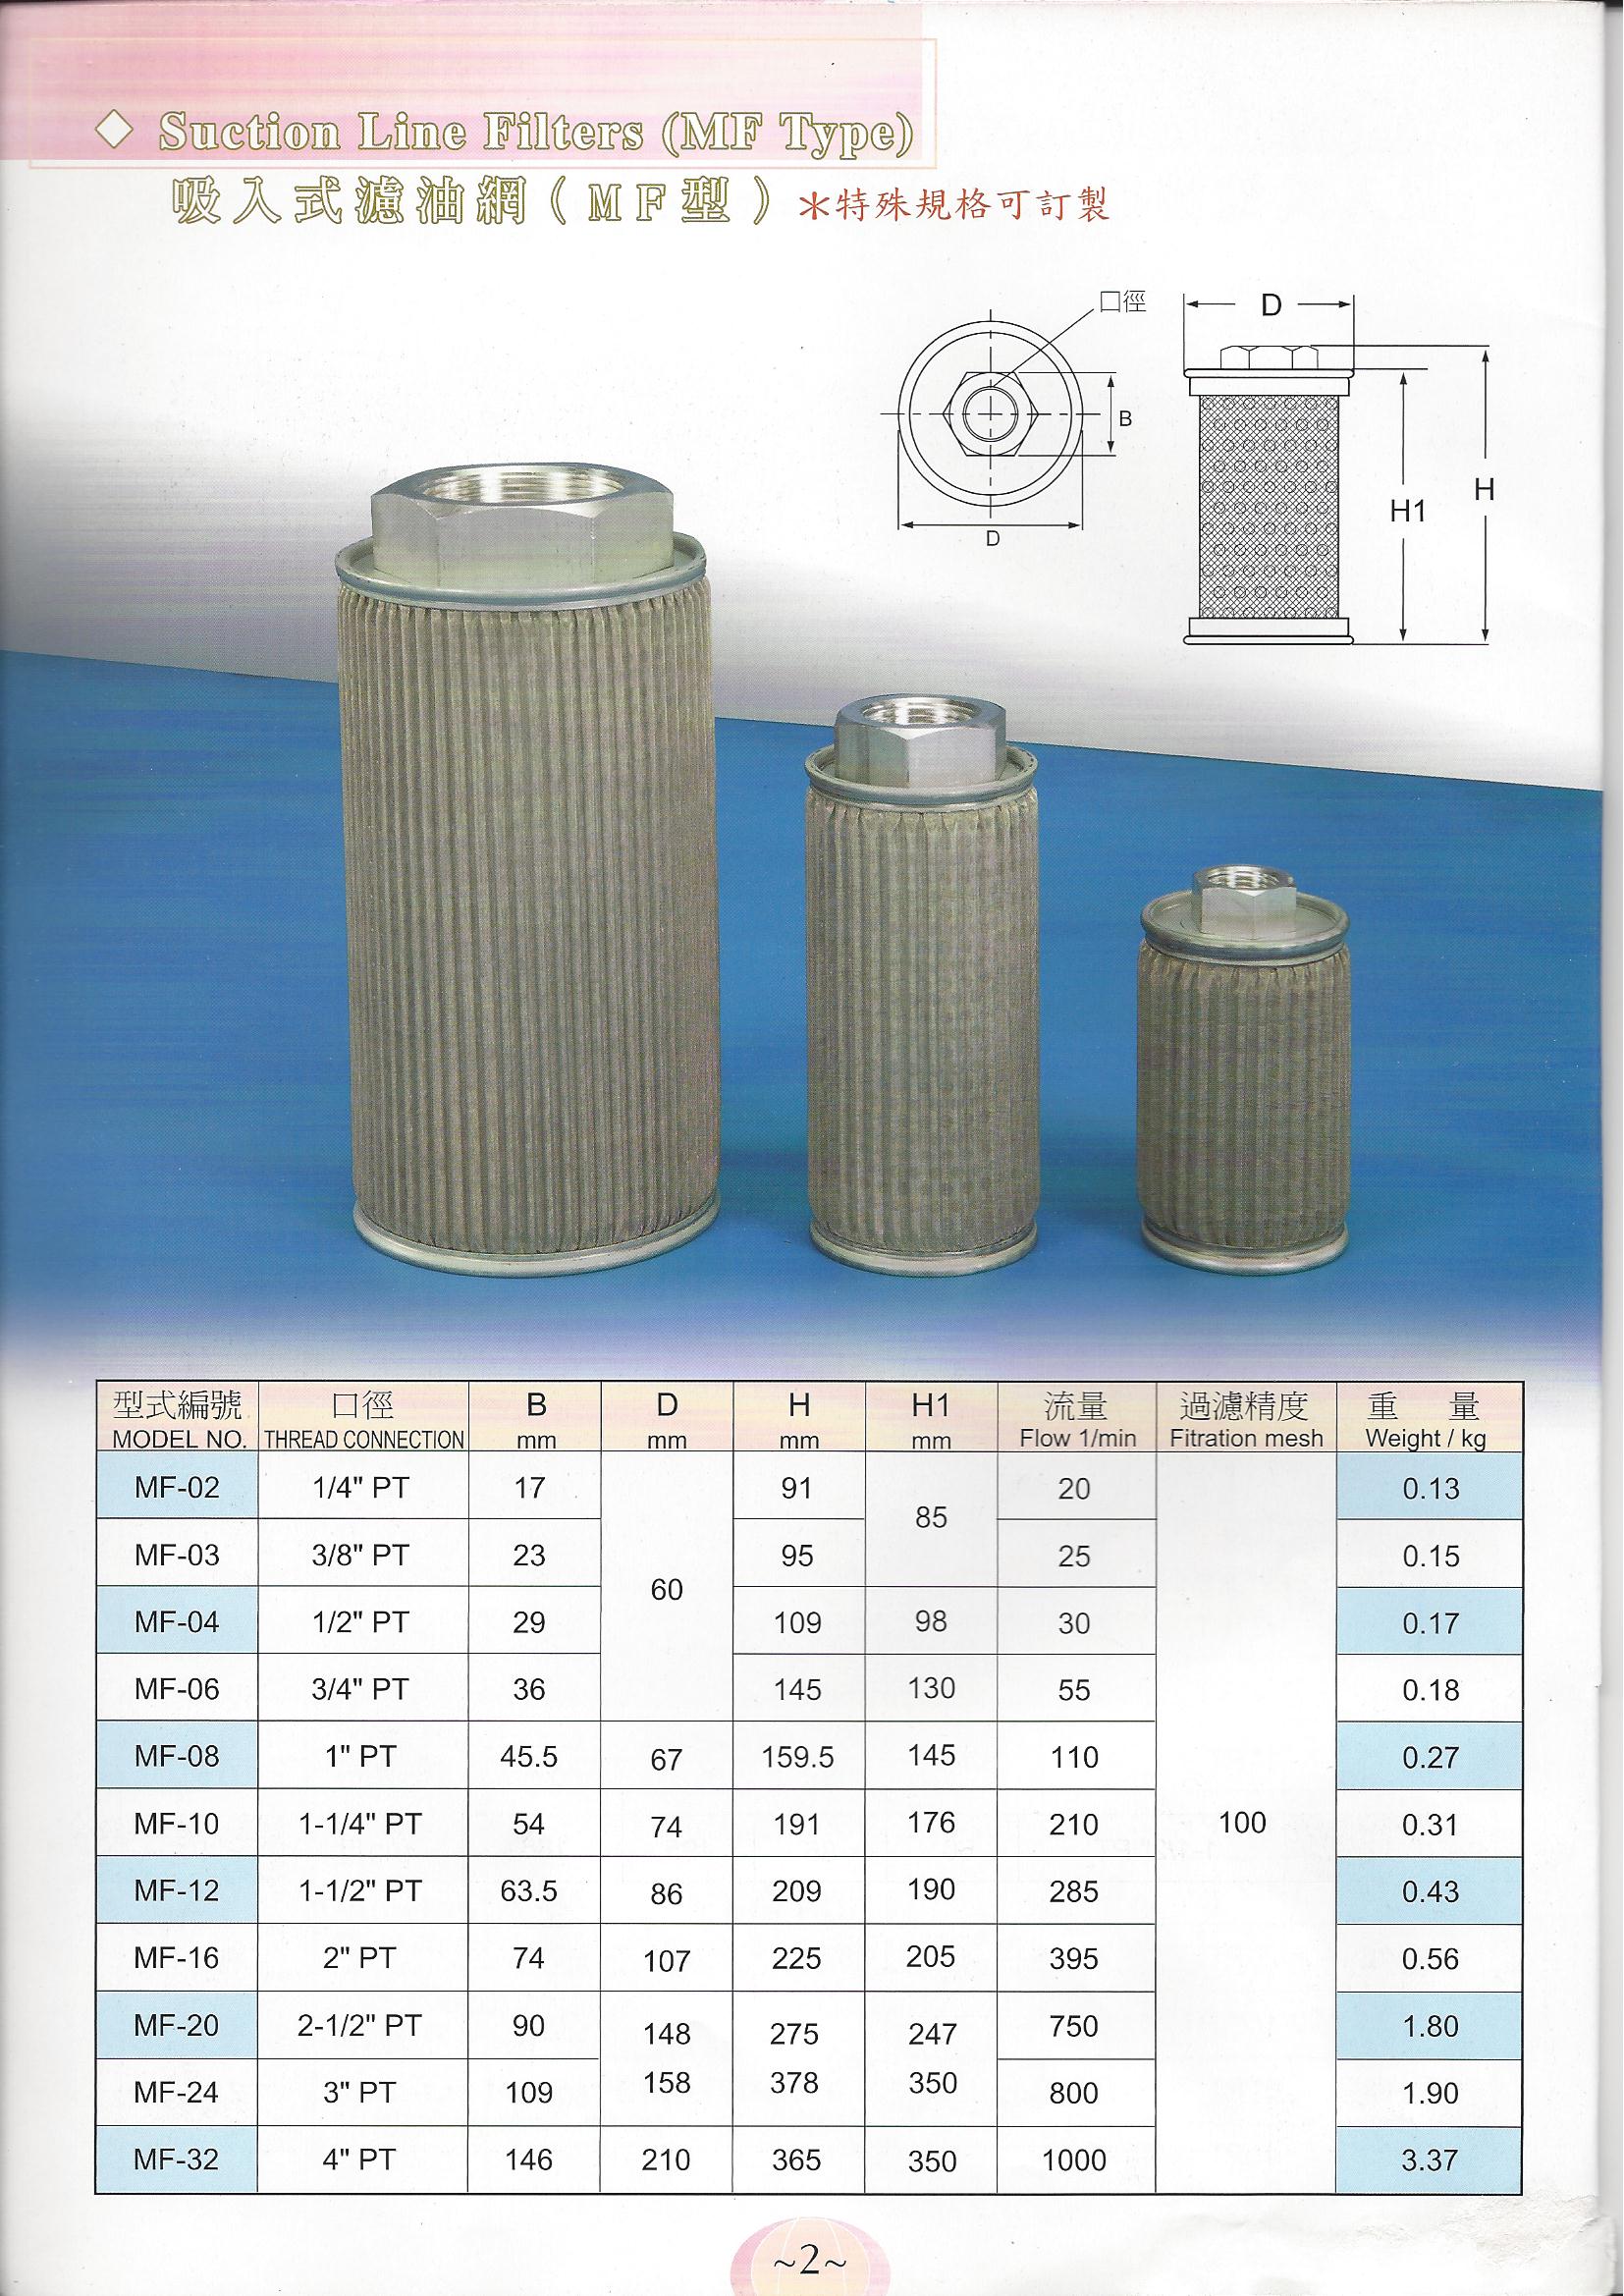 Hydraulic Suction Line Filters Mf Type Mf 08 1 Pt Ebay